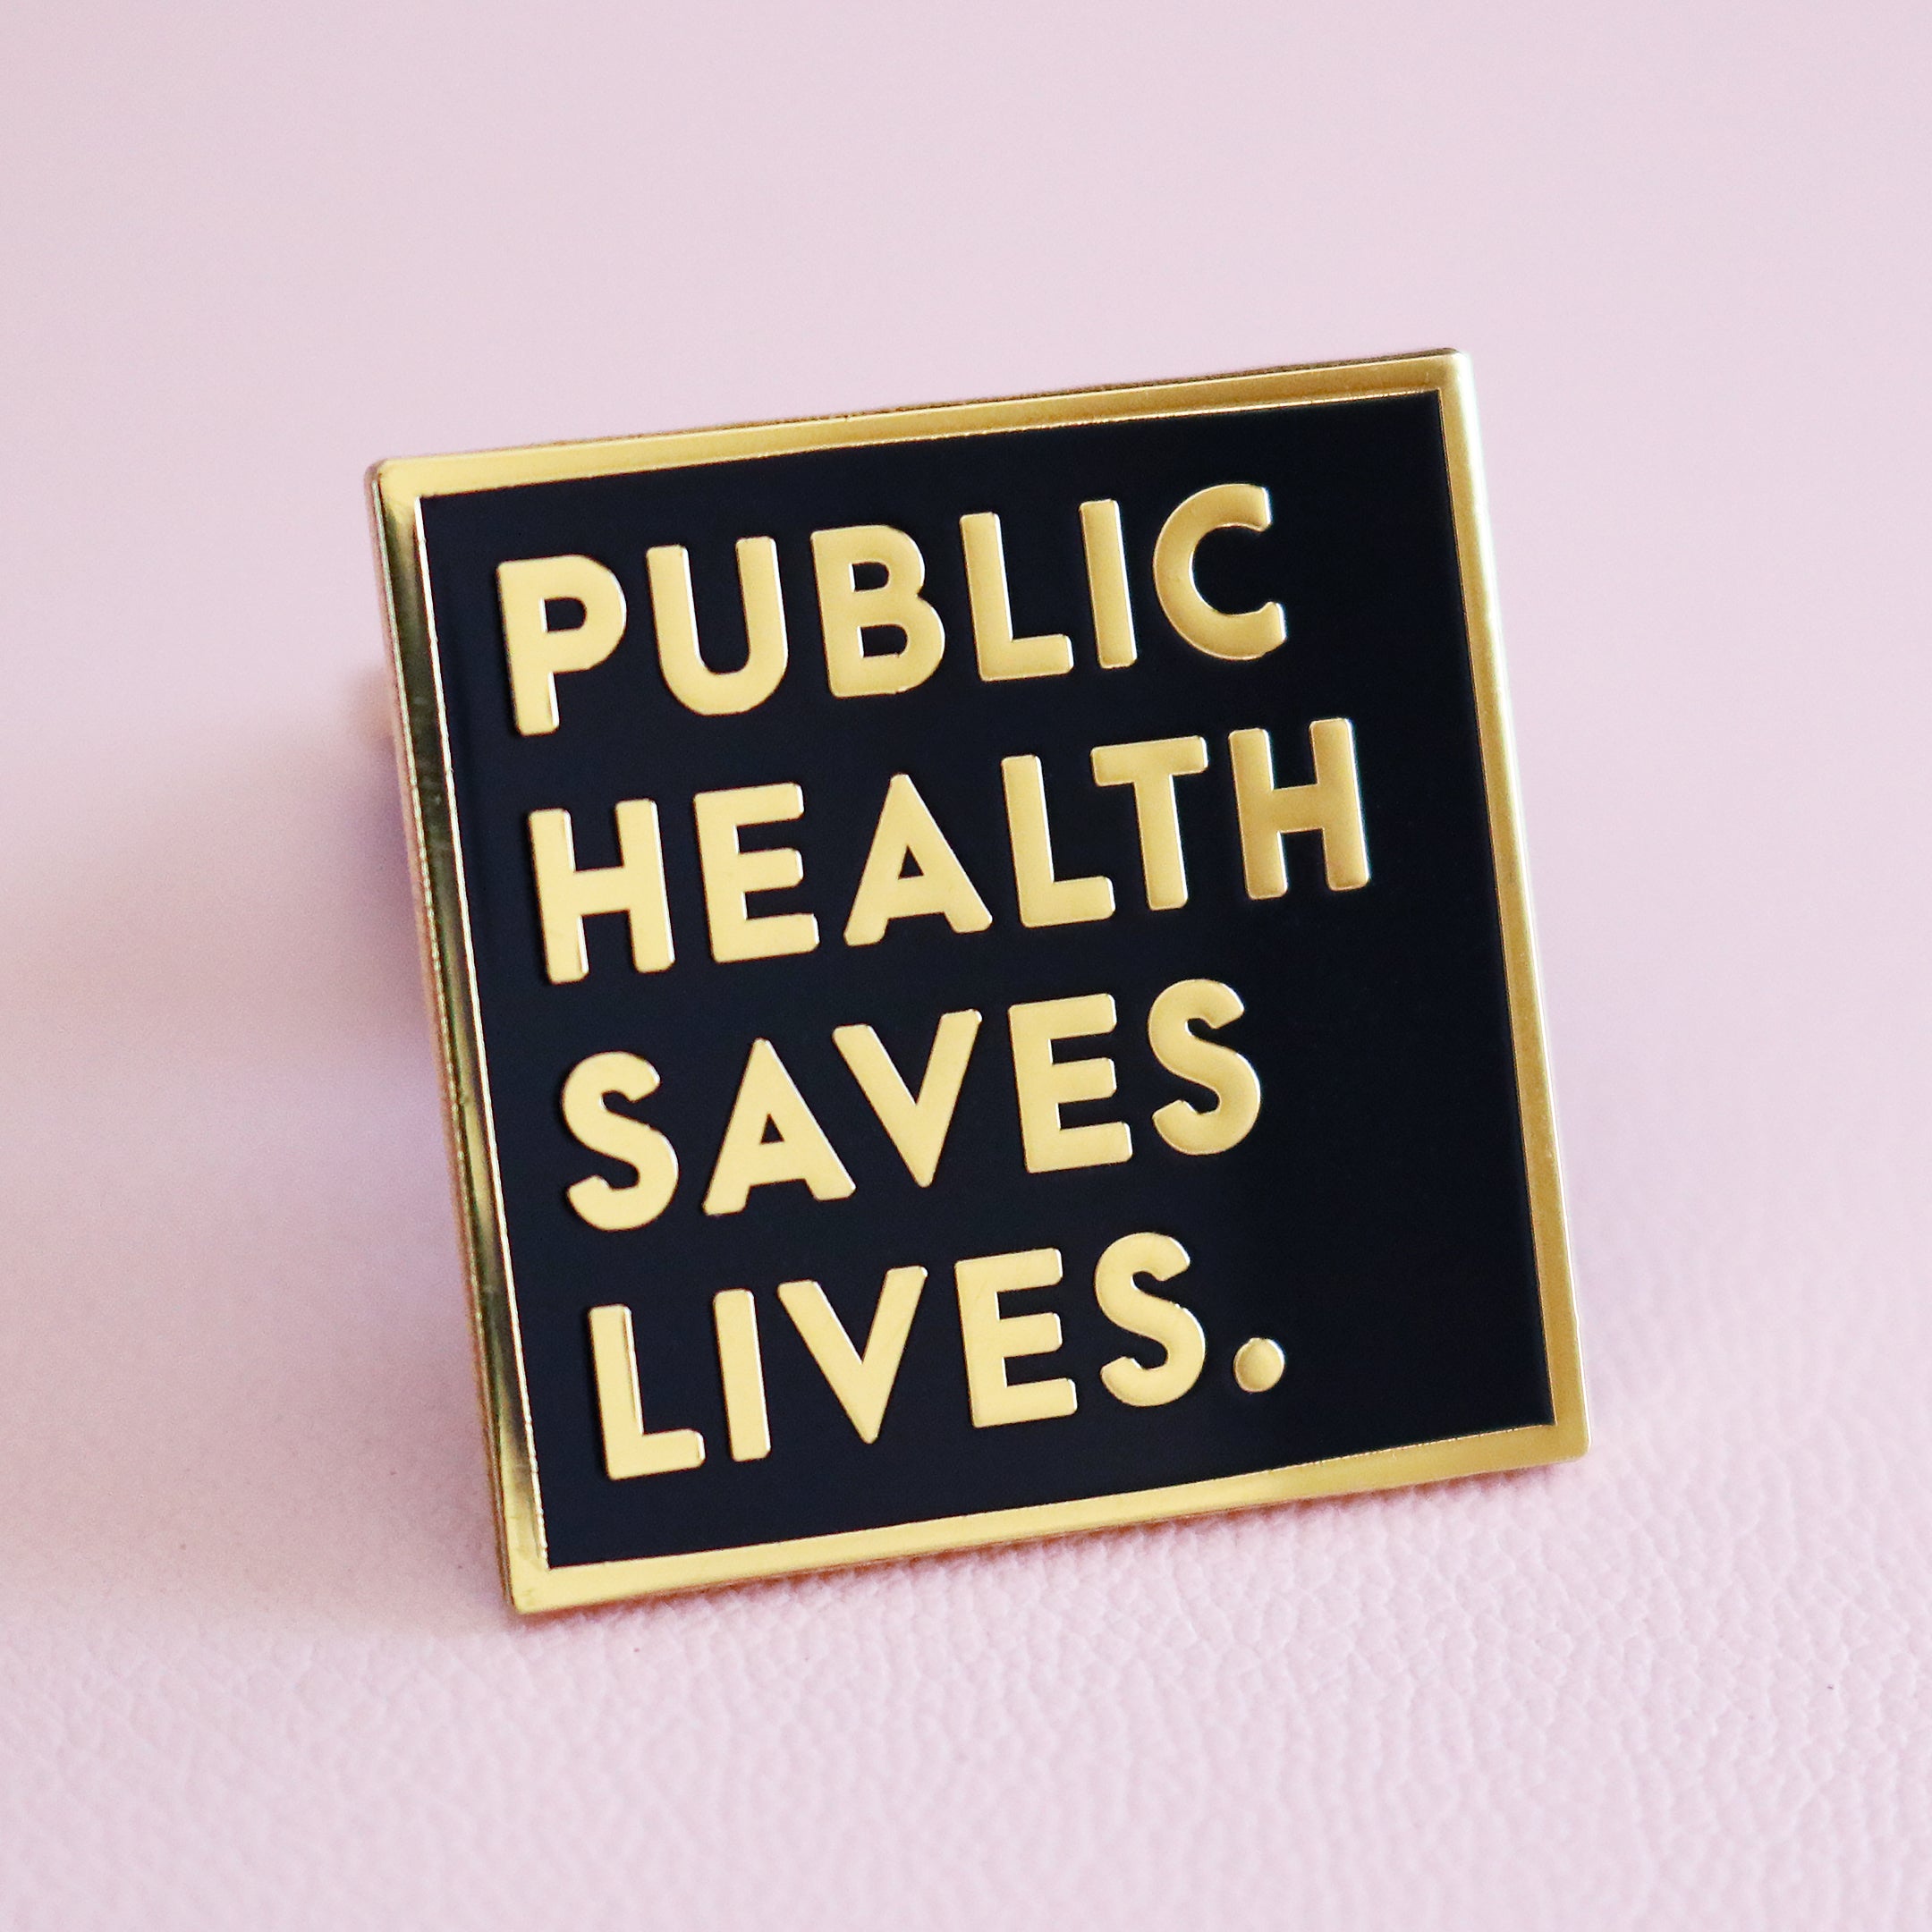 PUBLIC HEALTH SAVES LIVES